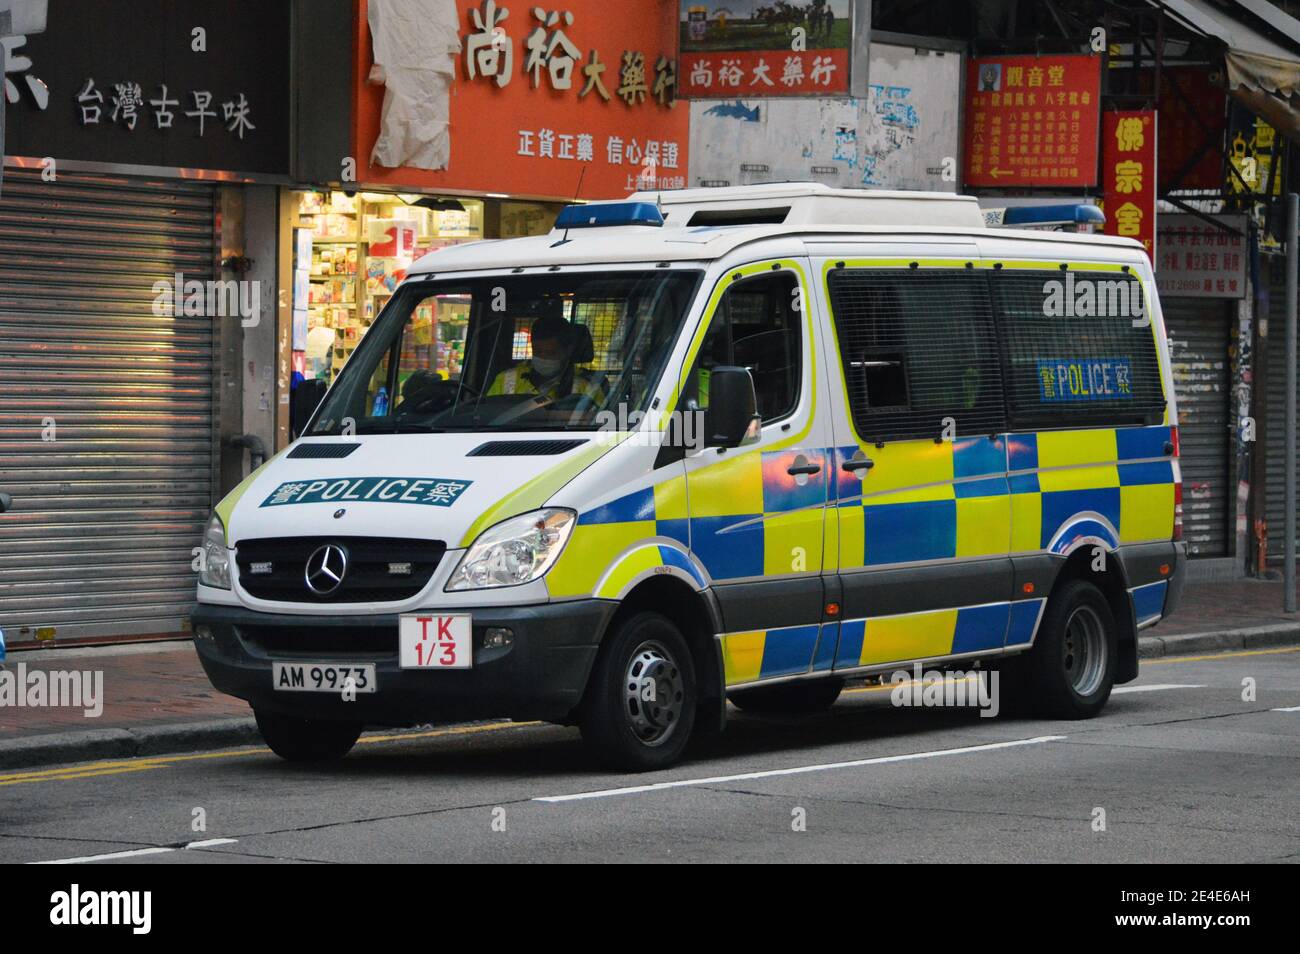 Hong Kong Police van during Covid-19 coronavirus pandemic lockdown in Yau Ma Tei, Kowloon, Hong Kong in January 2021 Stock Photo